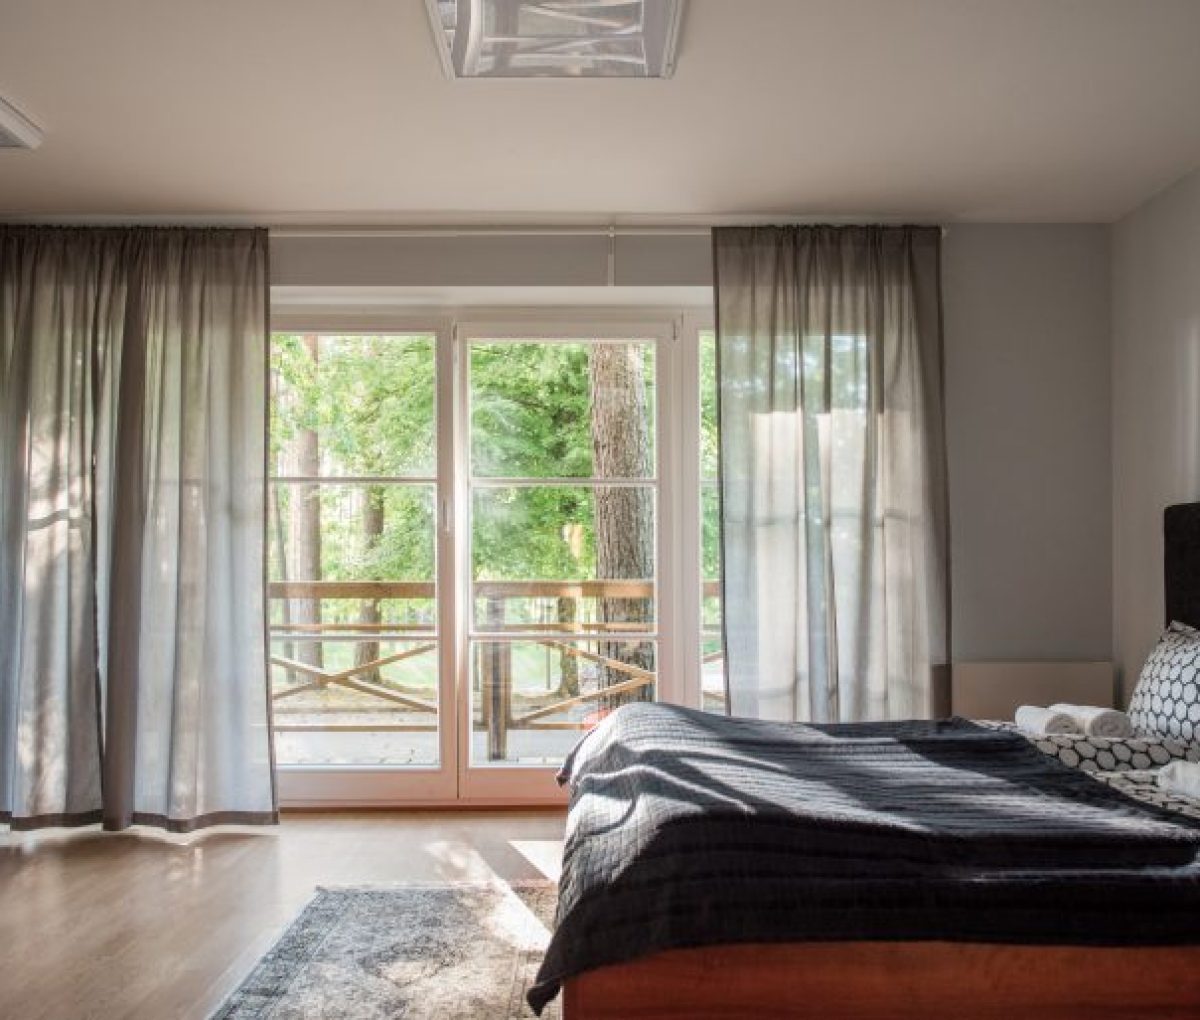 Lithuania - Paluses Kopa Hotel bedroom